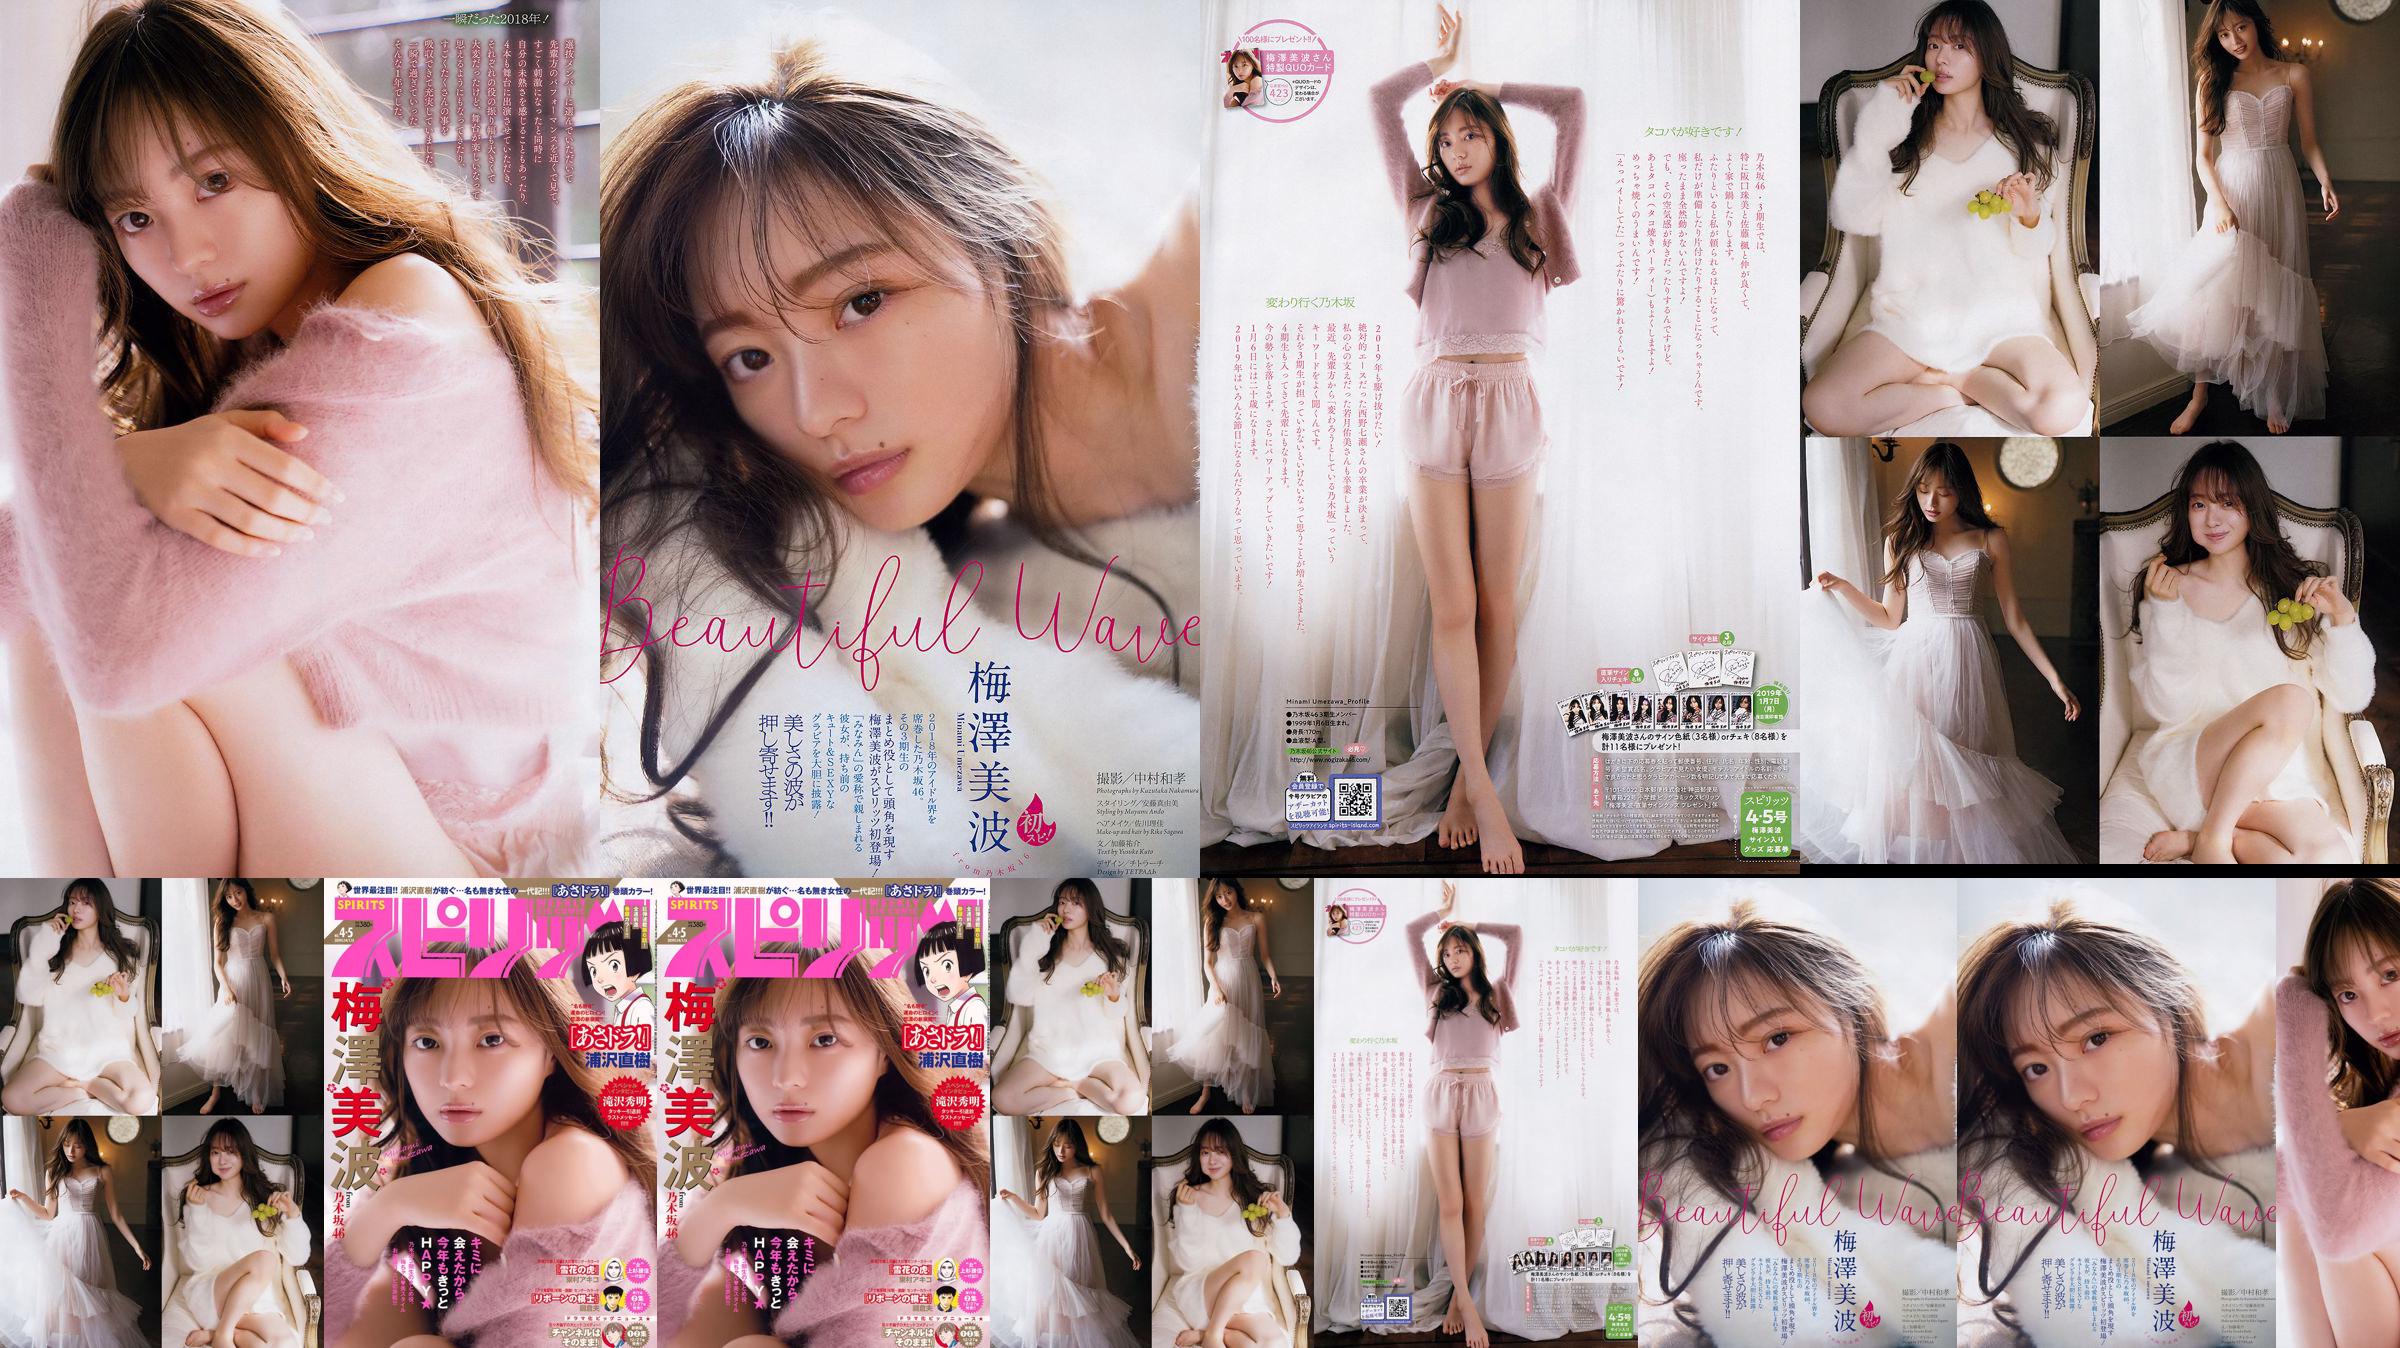 [Grands esprits de la bande dessinée hebdomadaire] Minami Umezawa 2019 N ° 04-05 Photo Magazine No.b0dfcc Page 2